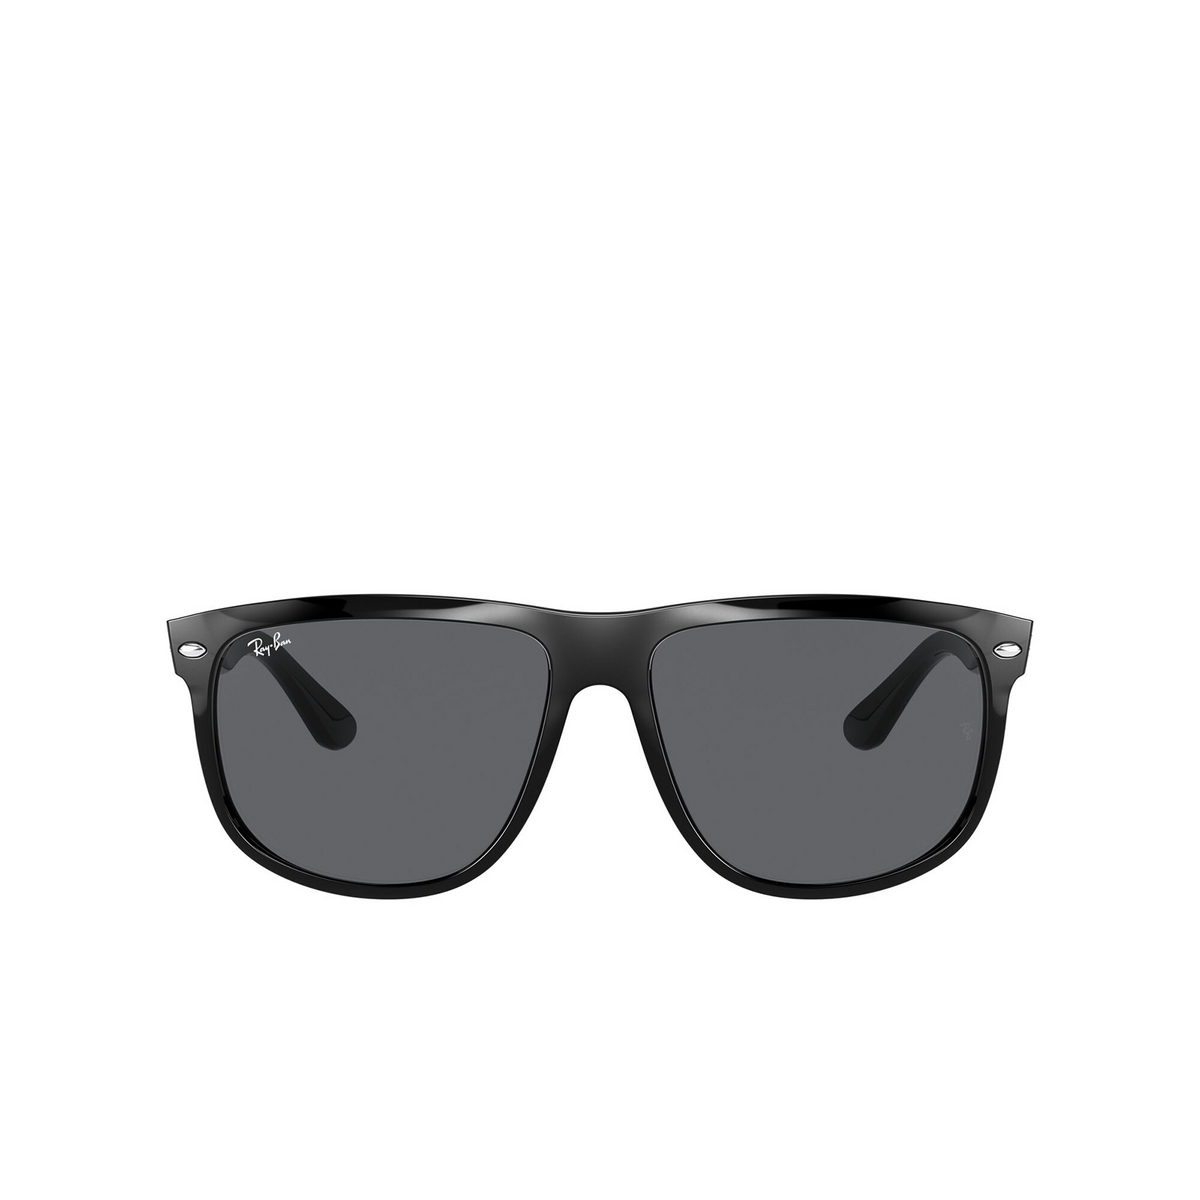 Ray-Ban BOYFRIEND Sunglasses 601/87 Black - front view